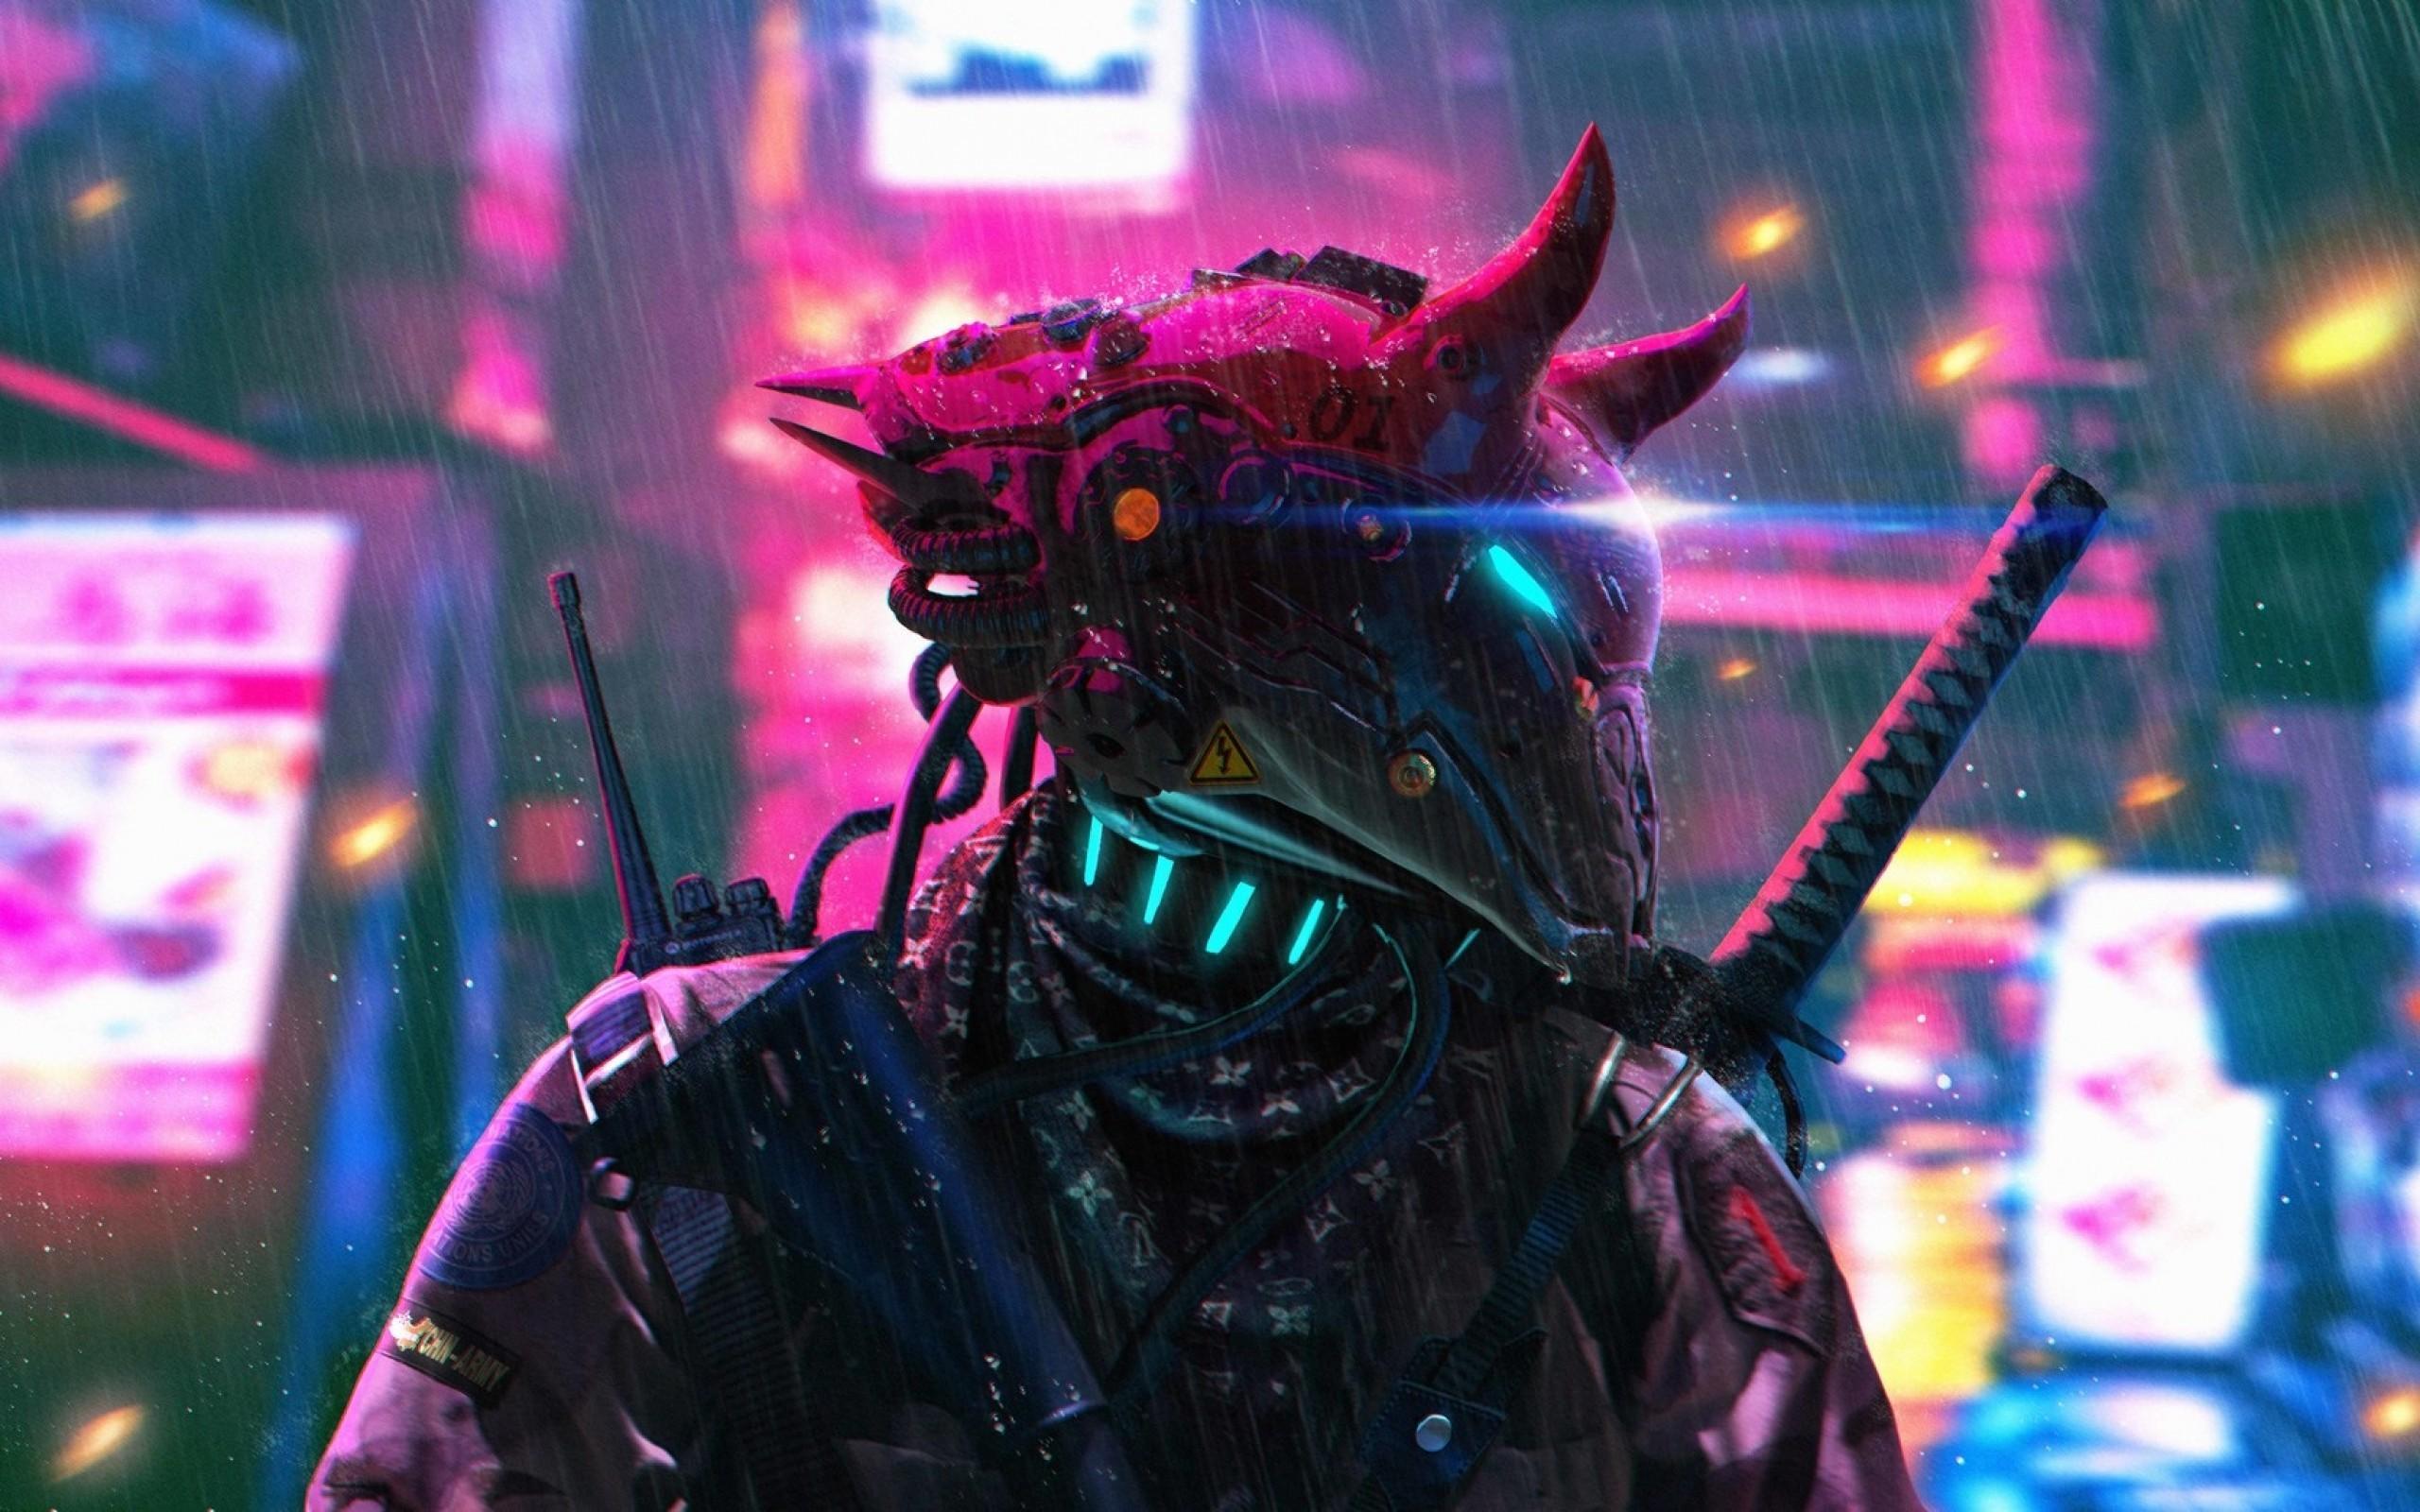 Download 2560x1600 Neon City, Cyberpunk Warrior, Sci Fi